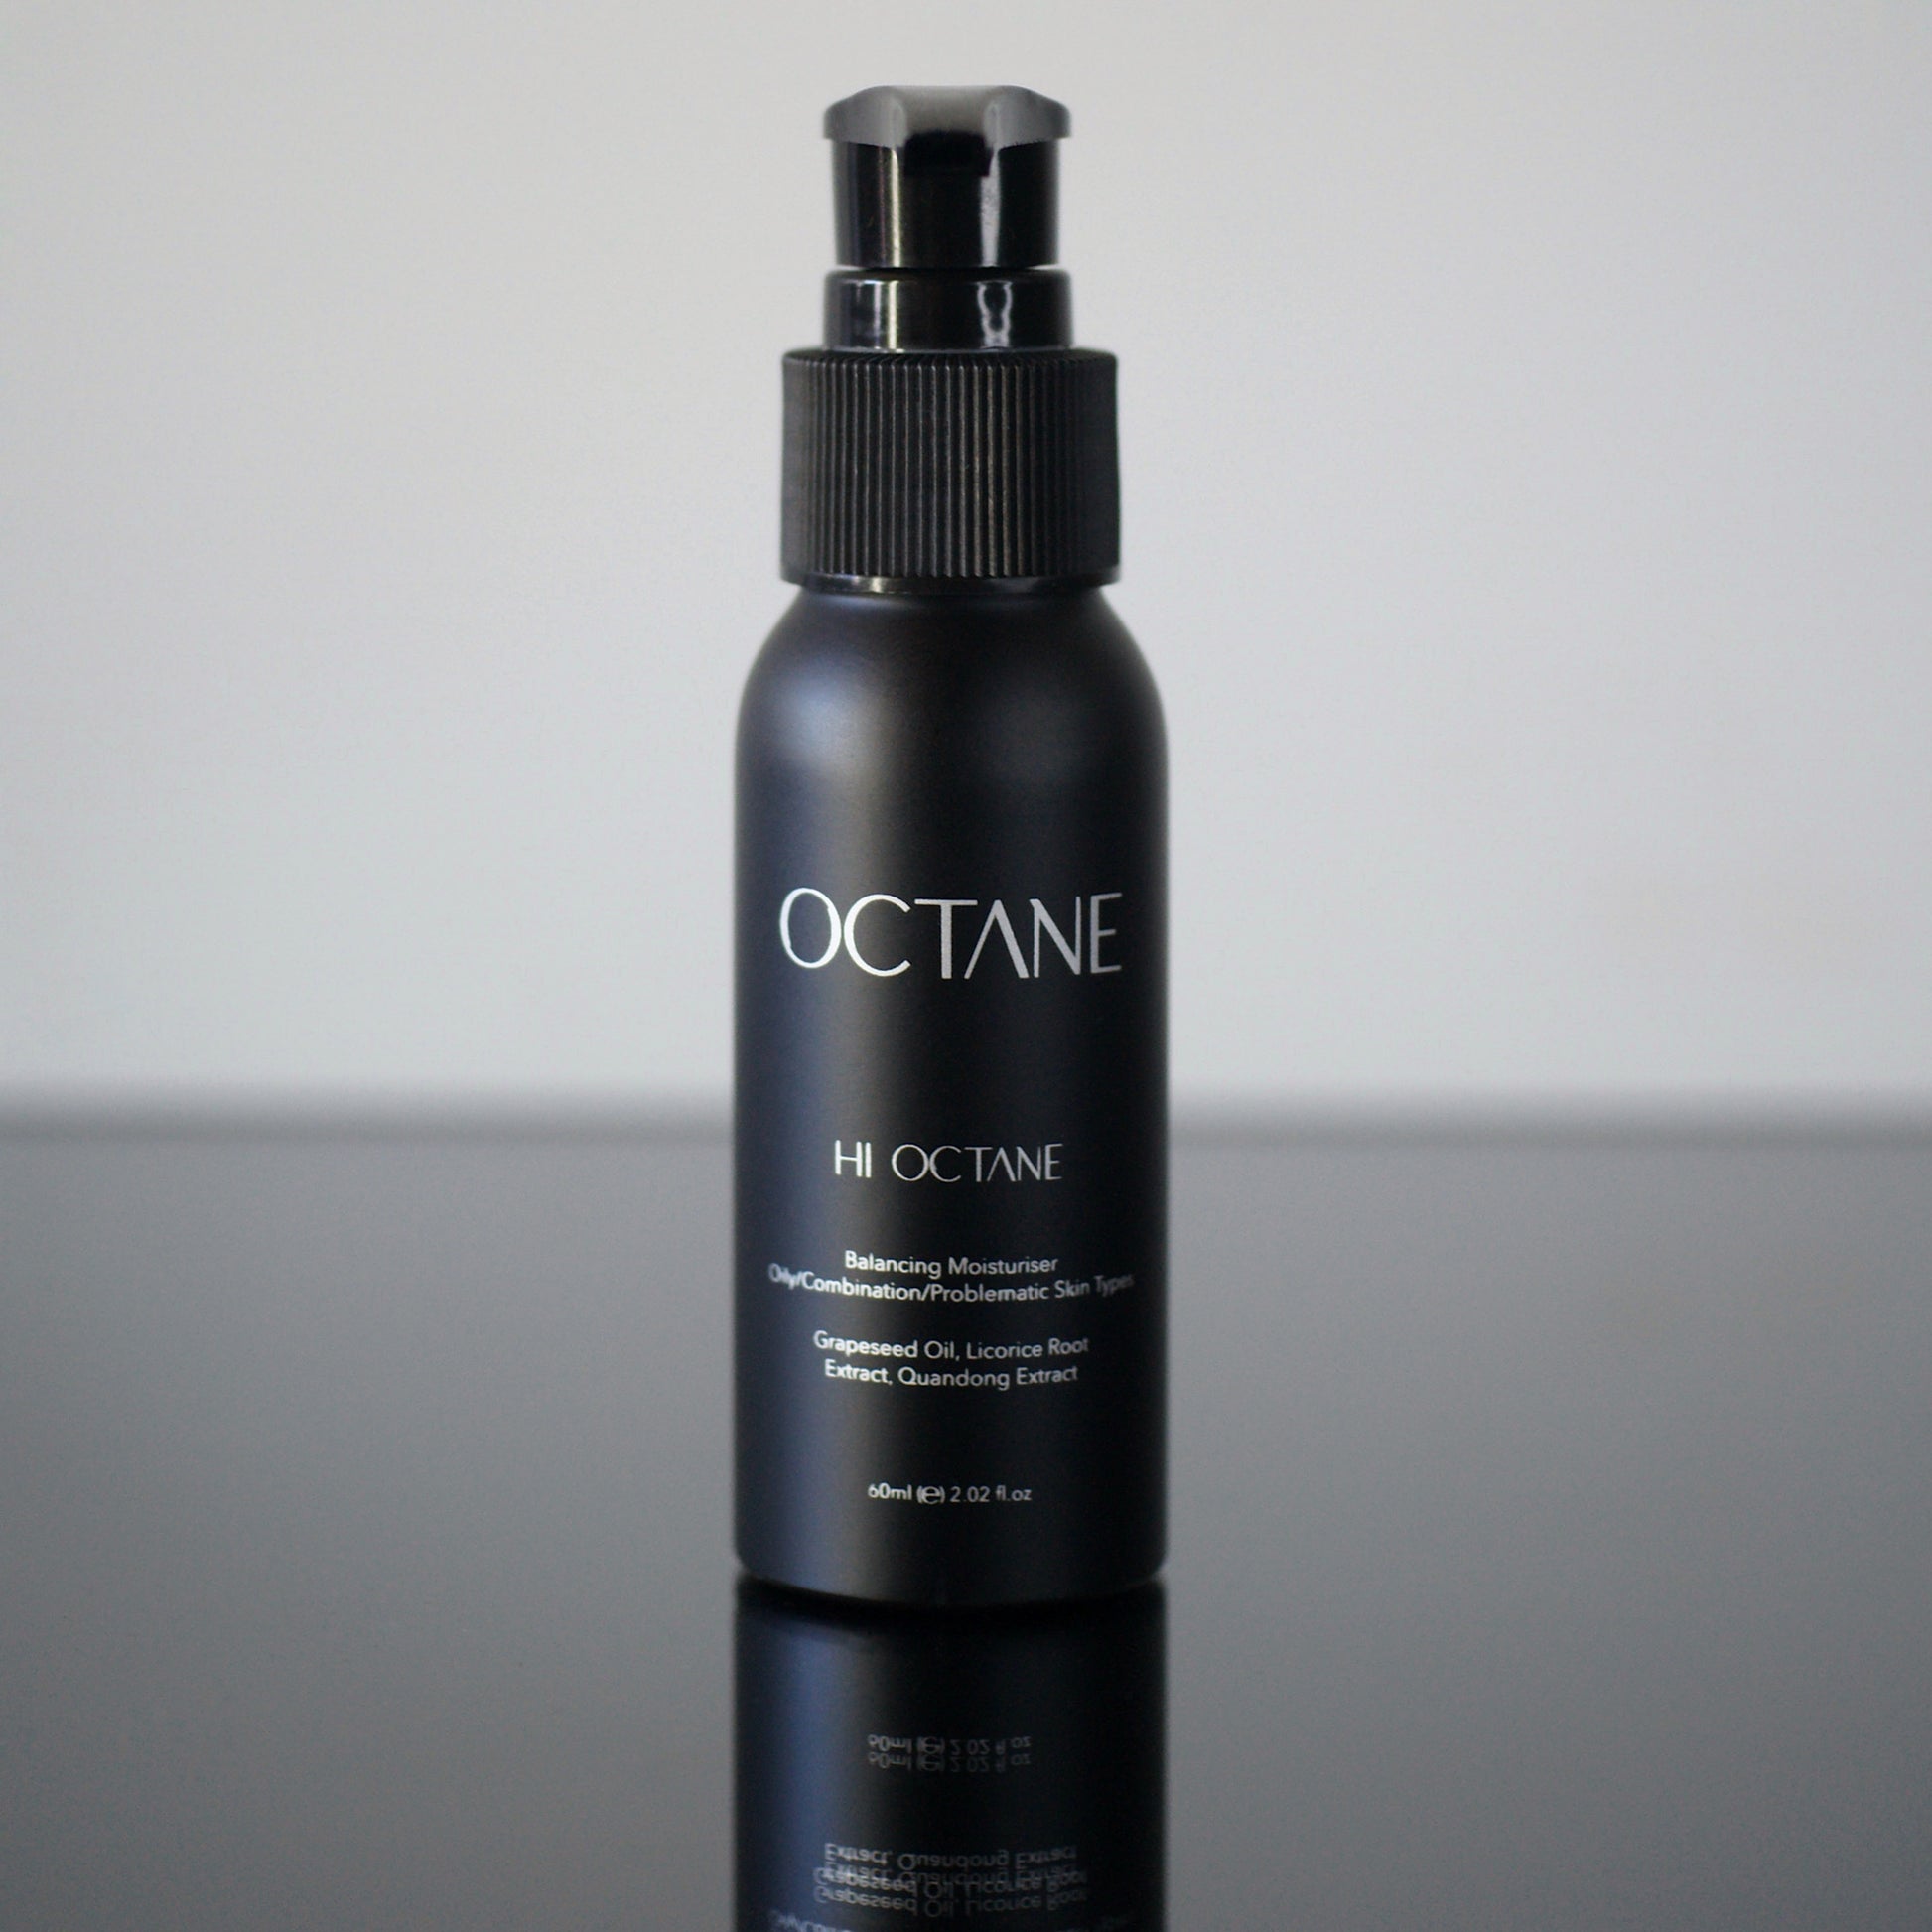 Hi Octane moisturizer Natural Sustainable Men's Skincare - Octane Skin